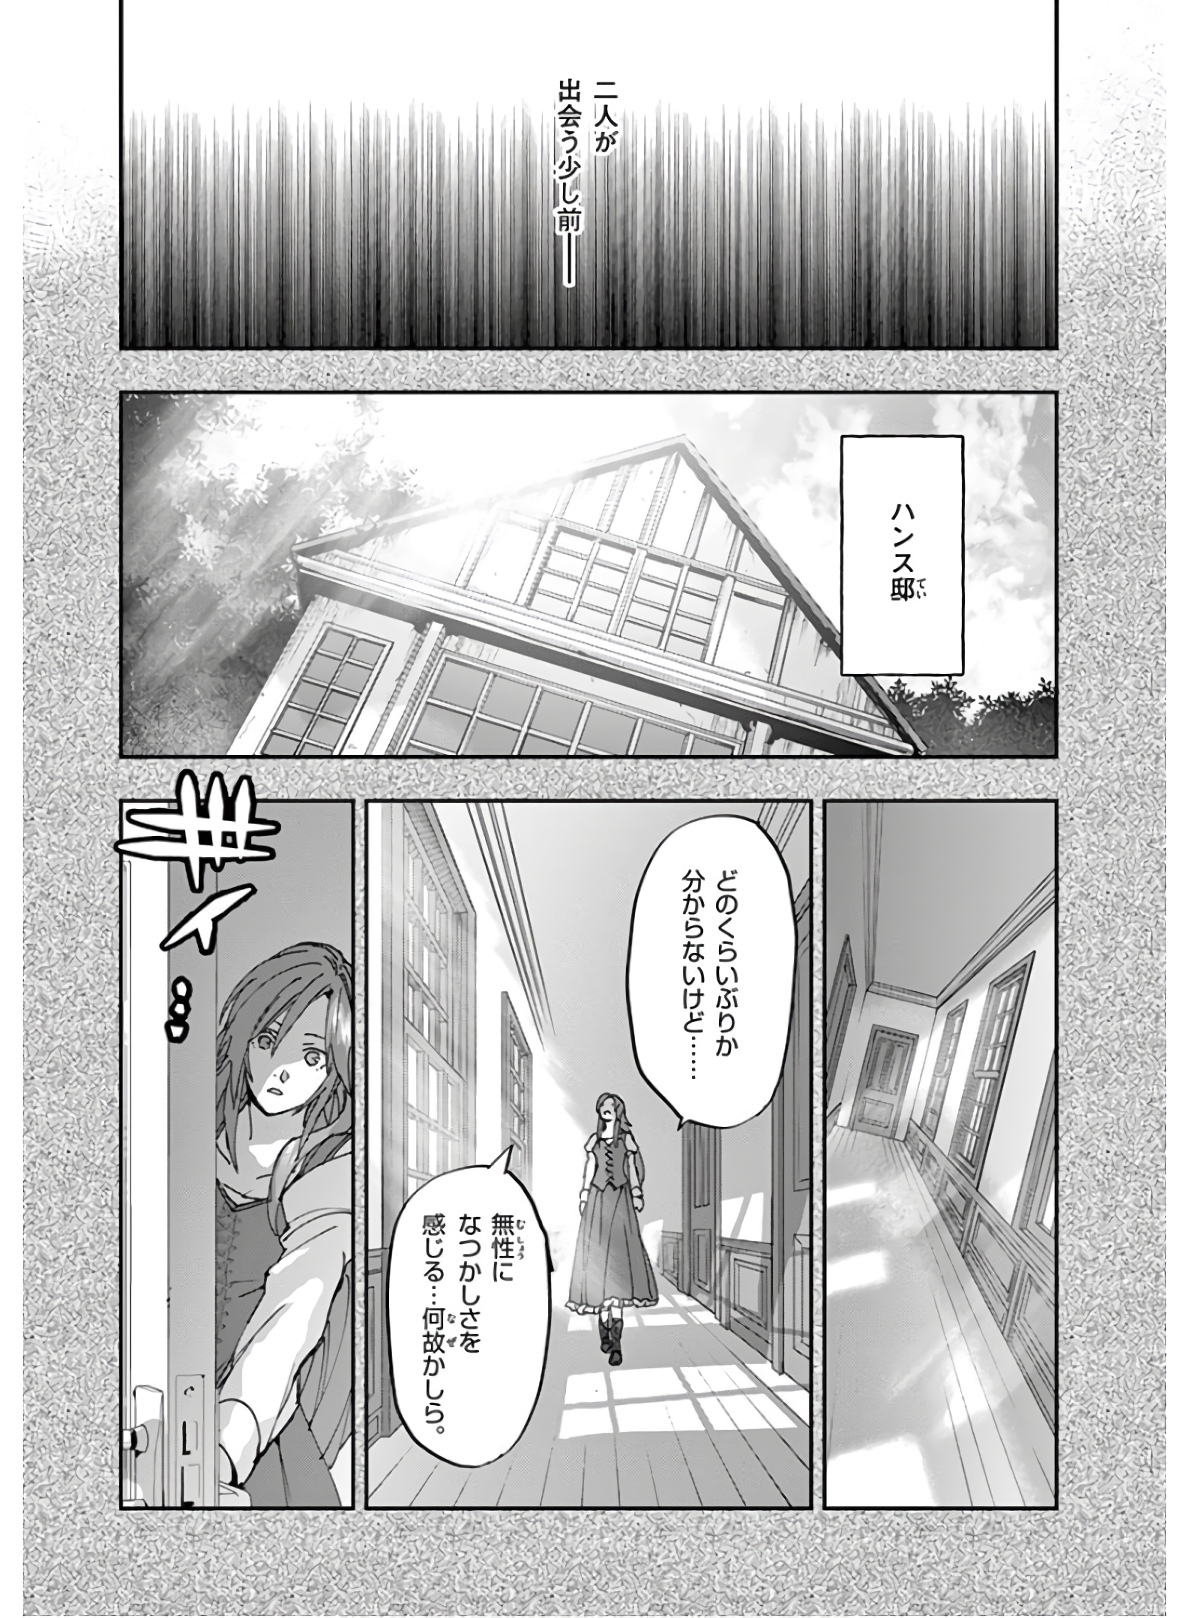 Ginrou Bloodborne - Chapter 108 - Page 3